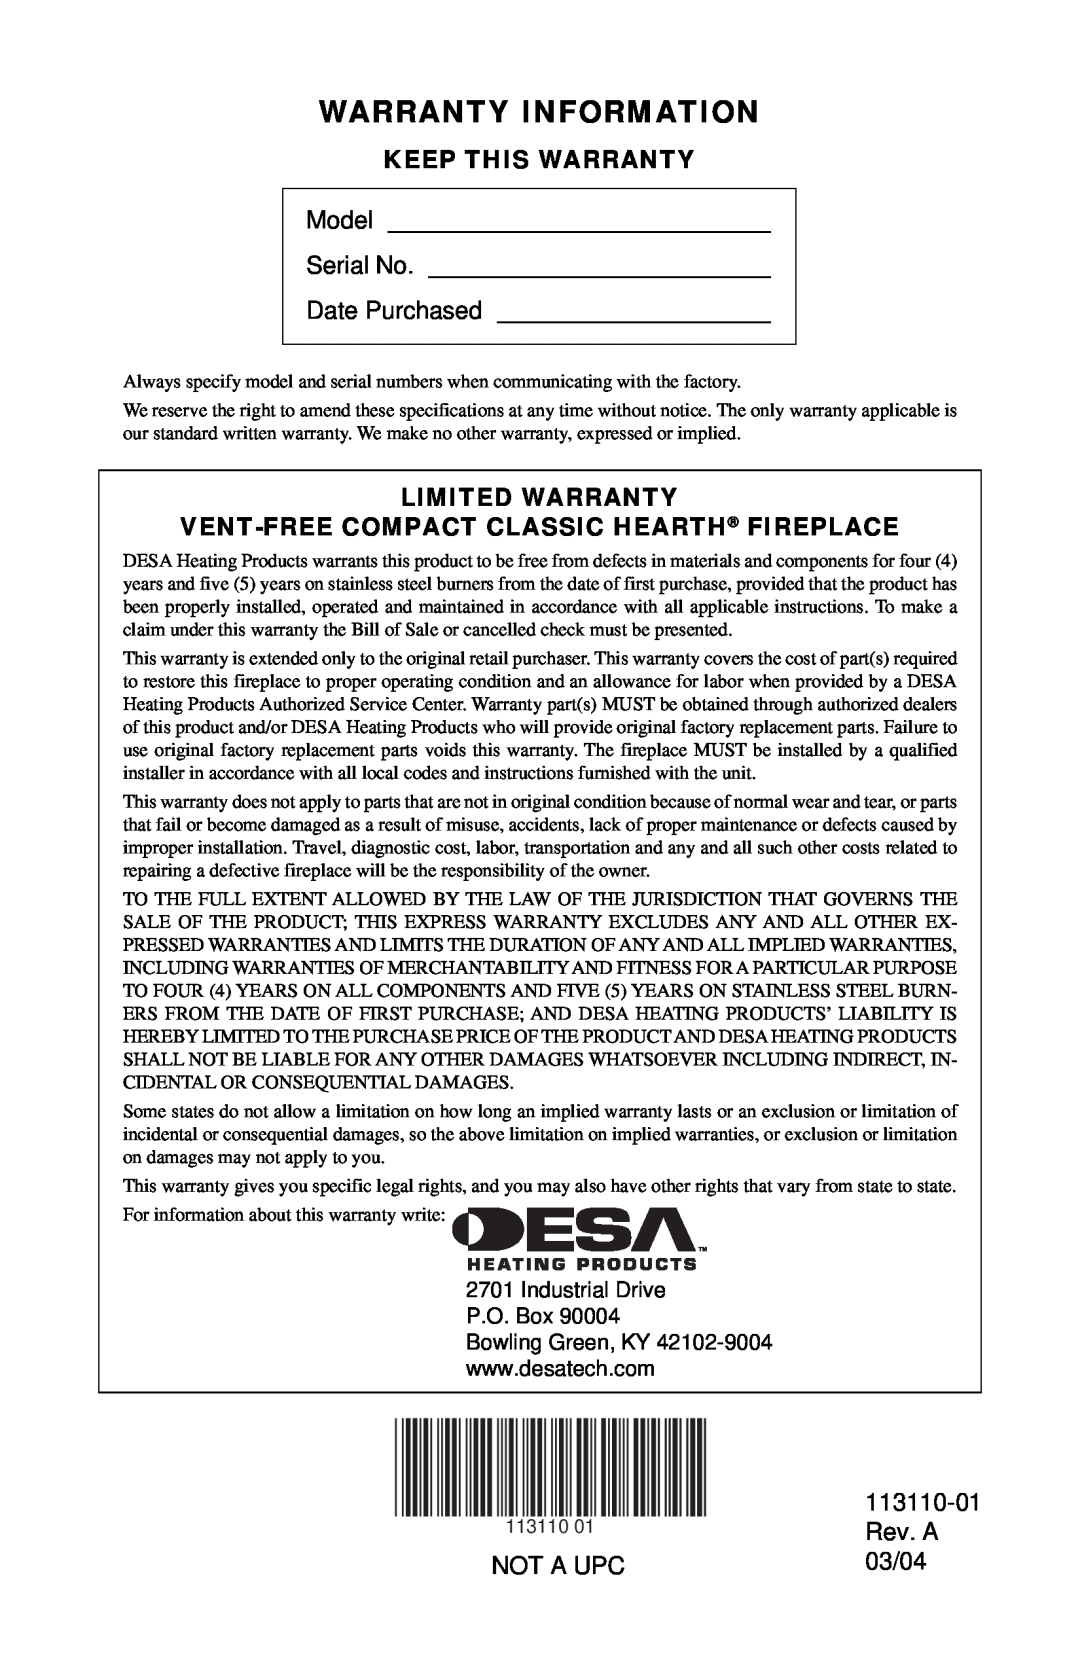 Desa EFS26NRA Warranty Information, Keep This Warranty, Model, Serial No, Date Purchased, Limited Warranty, 113110-01 